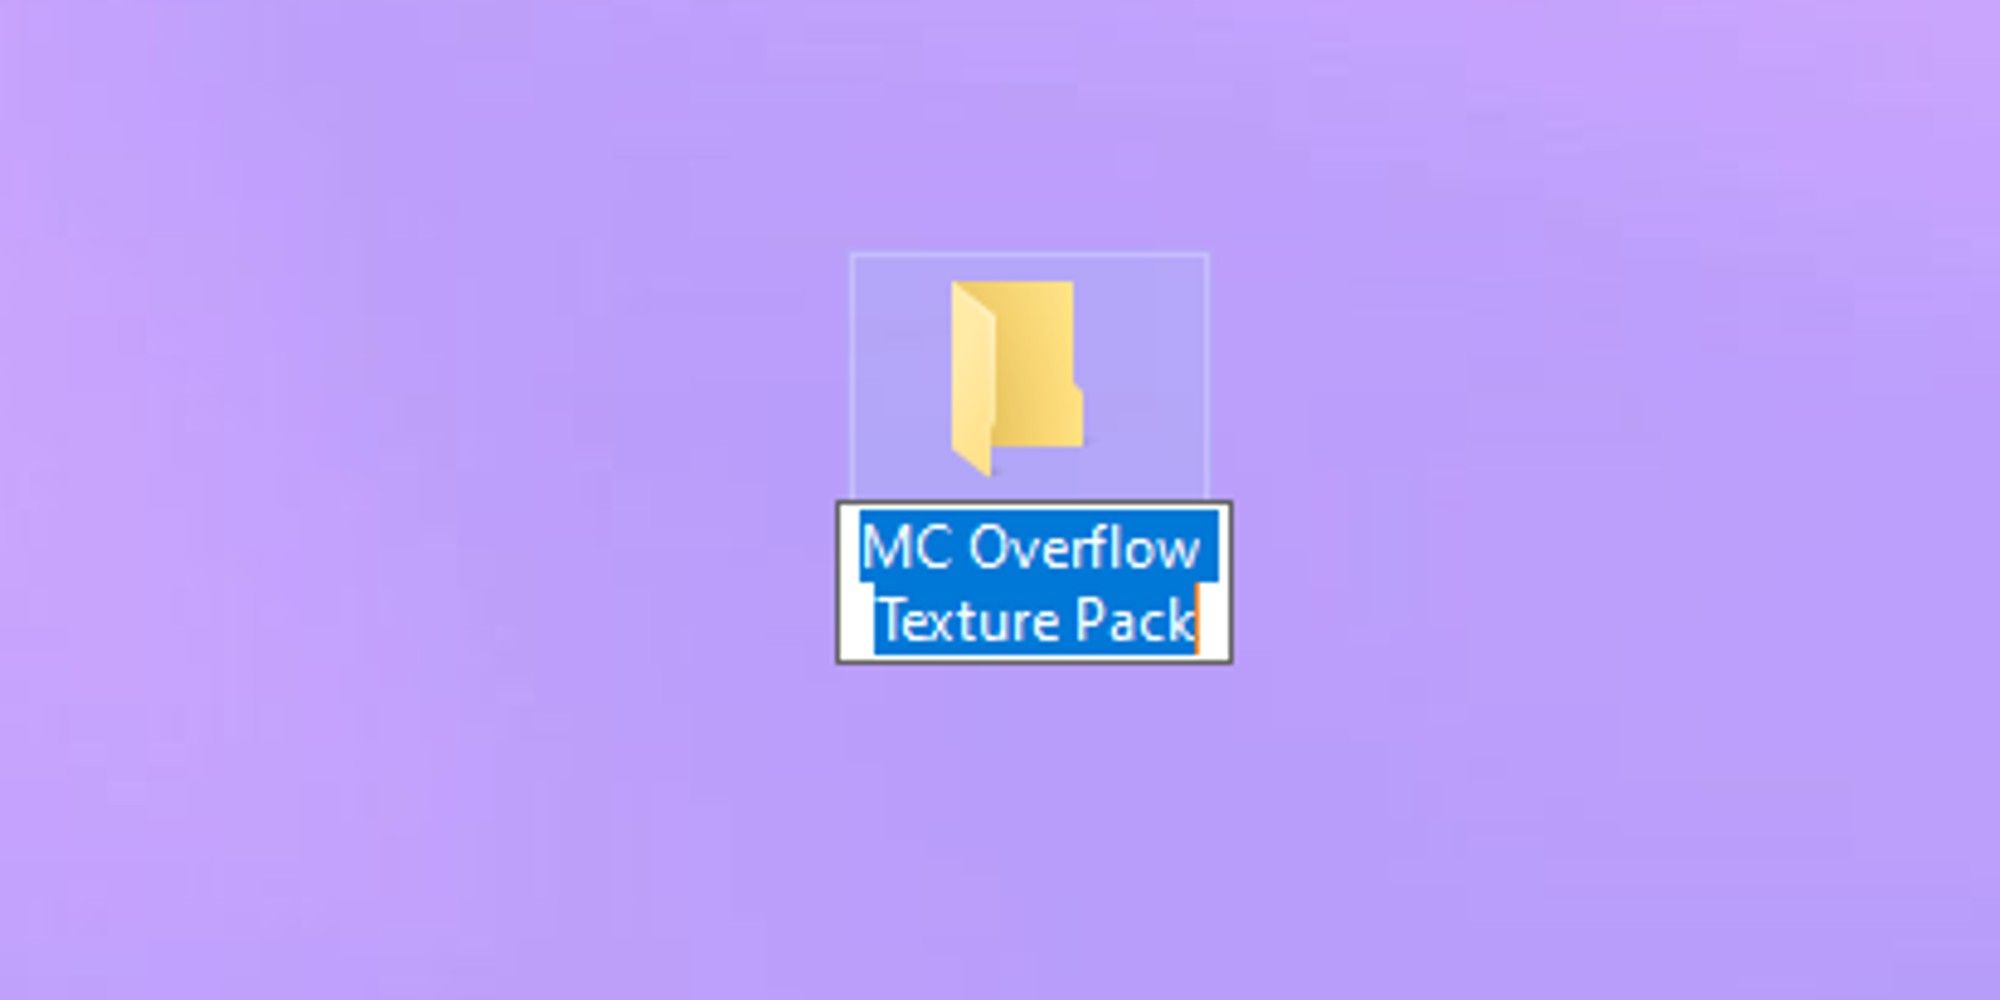 Create a new folder on your desktop